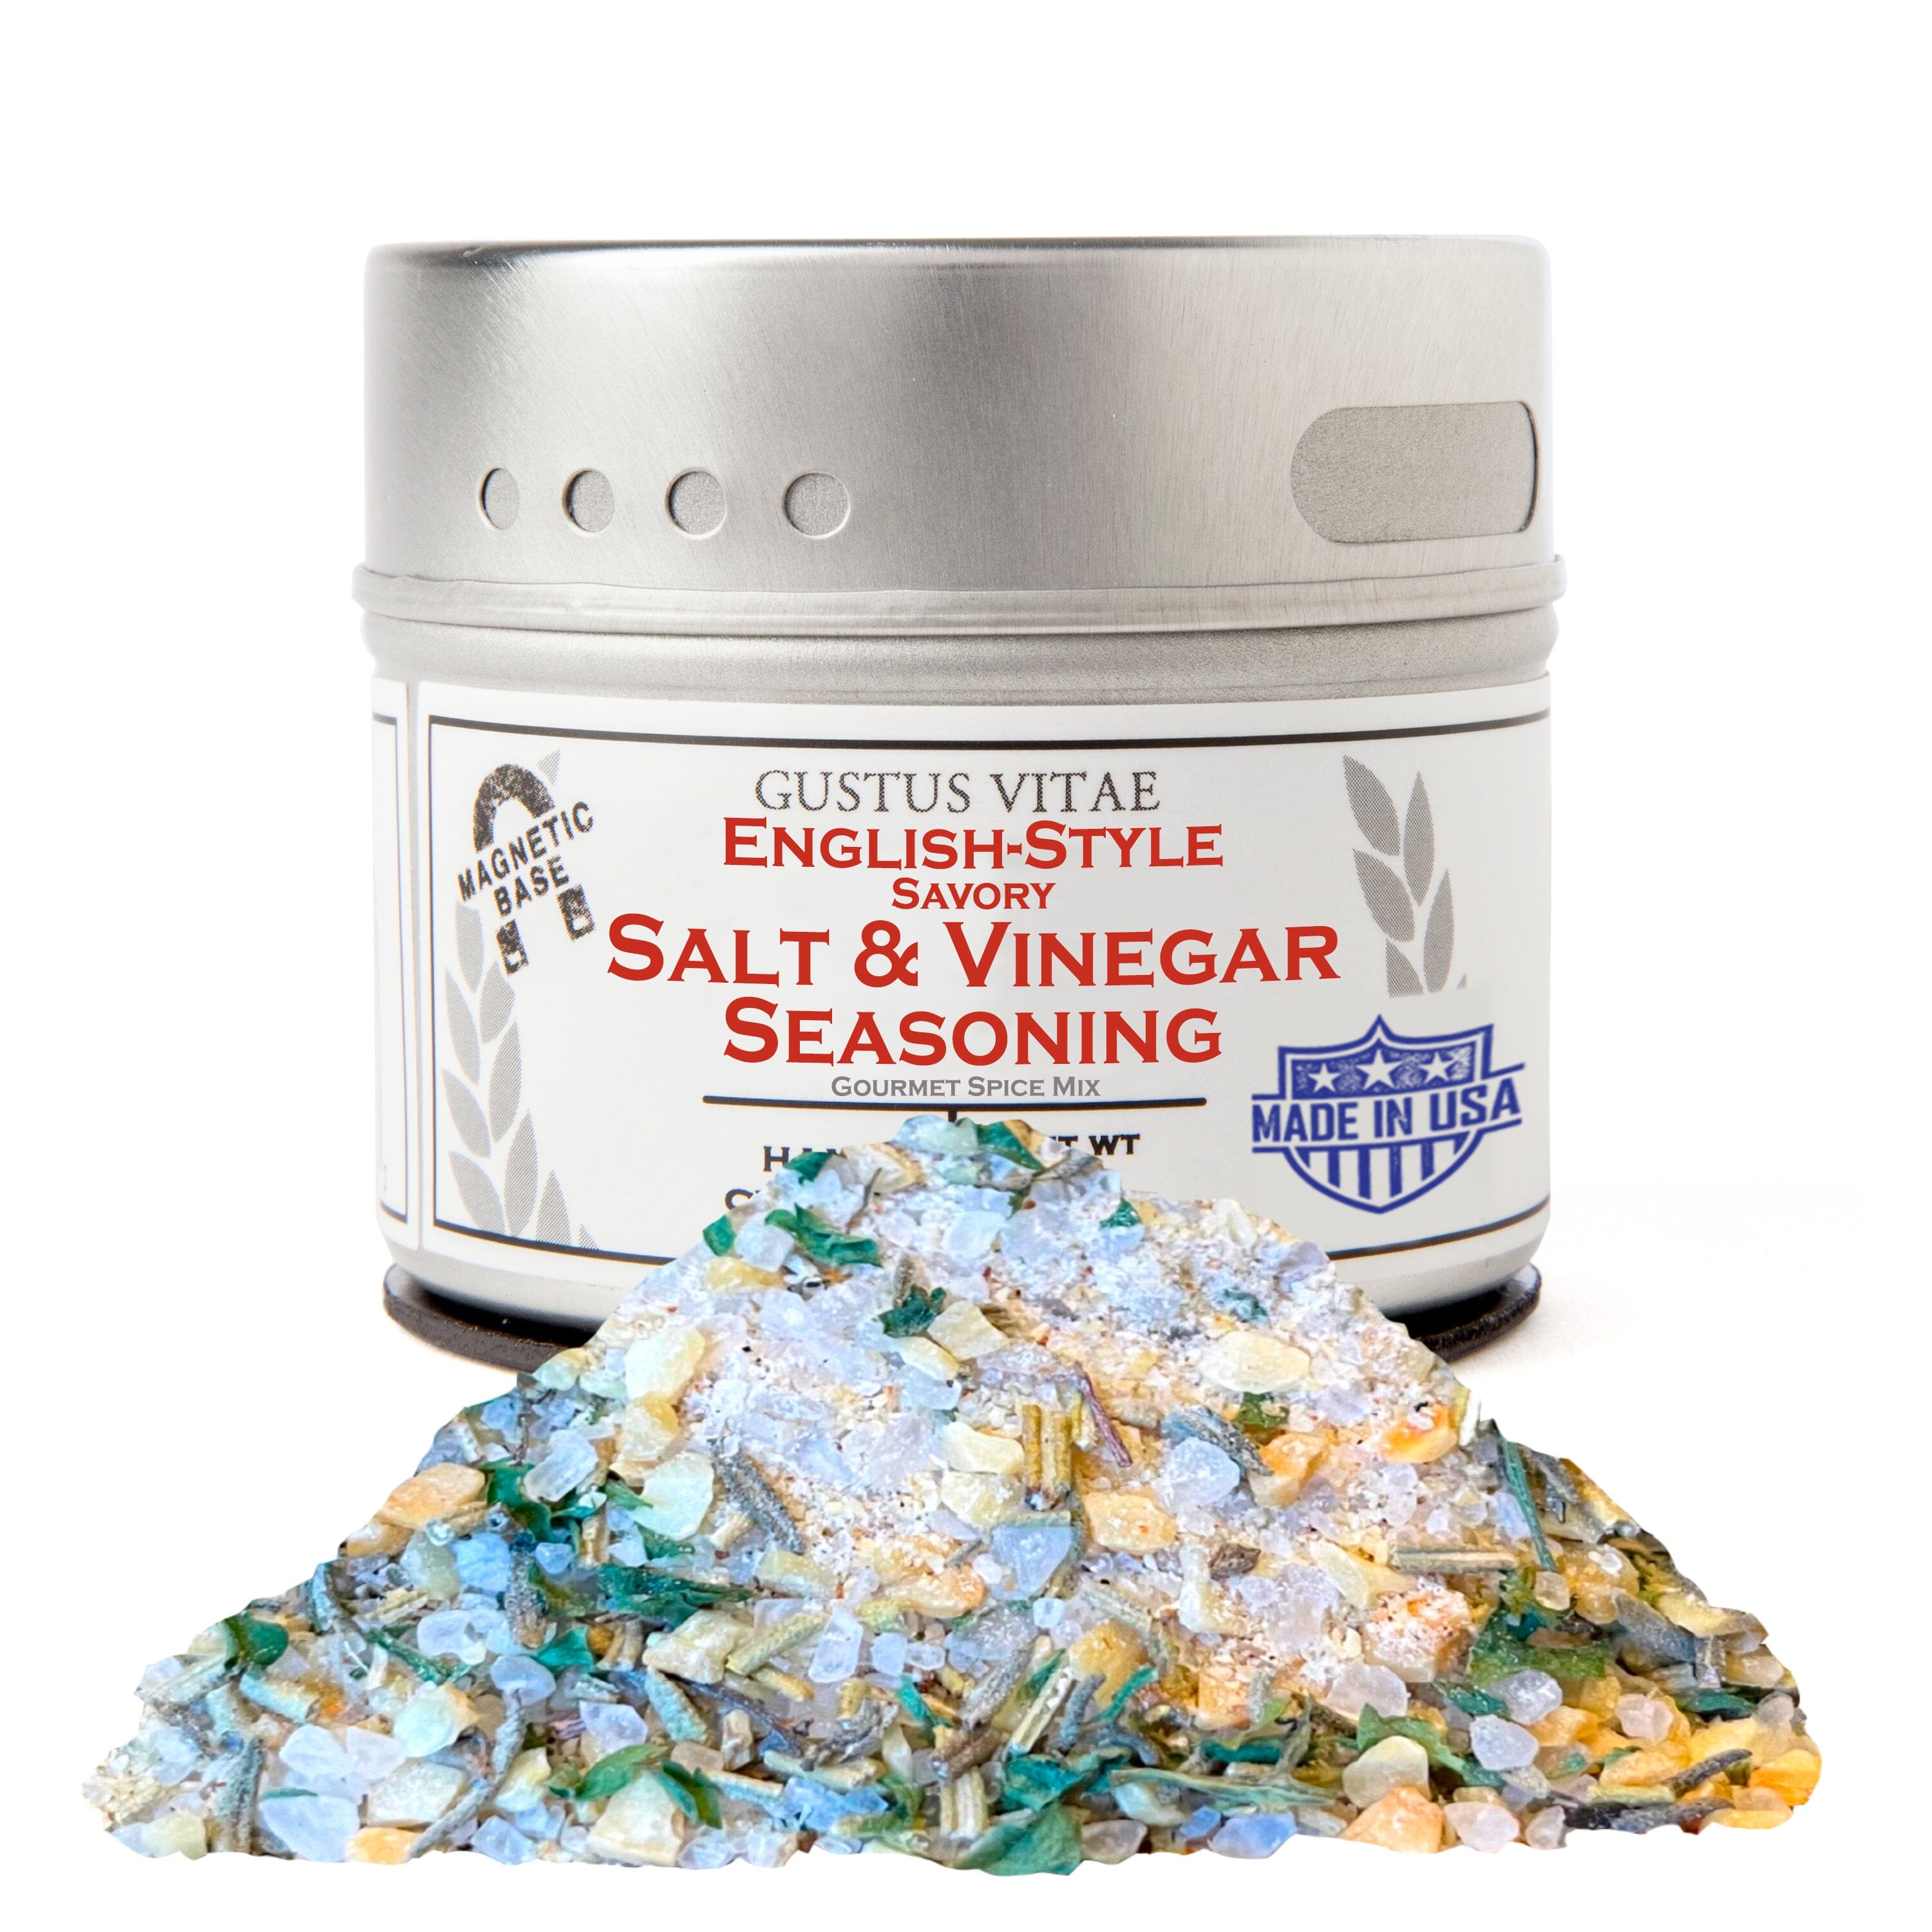  Salt & Vinegar Seasoning - XL 6 oz Bag - Zested Tangy